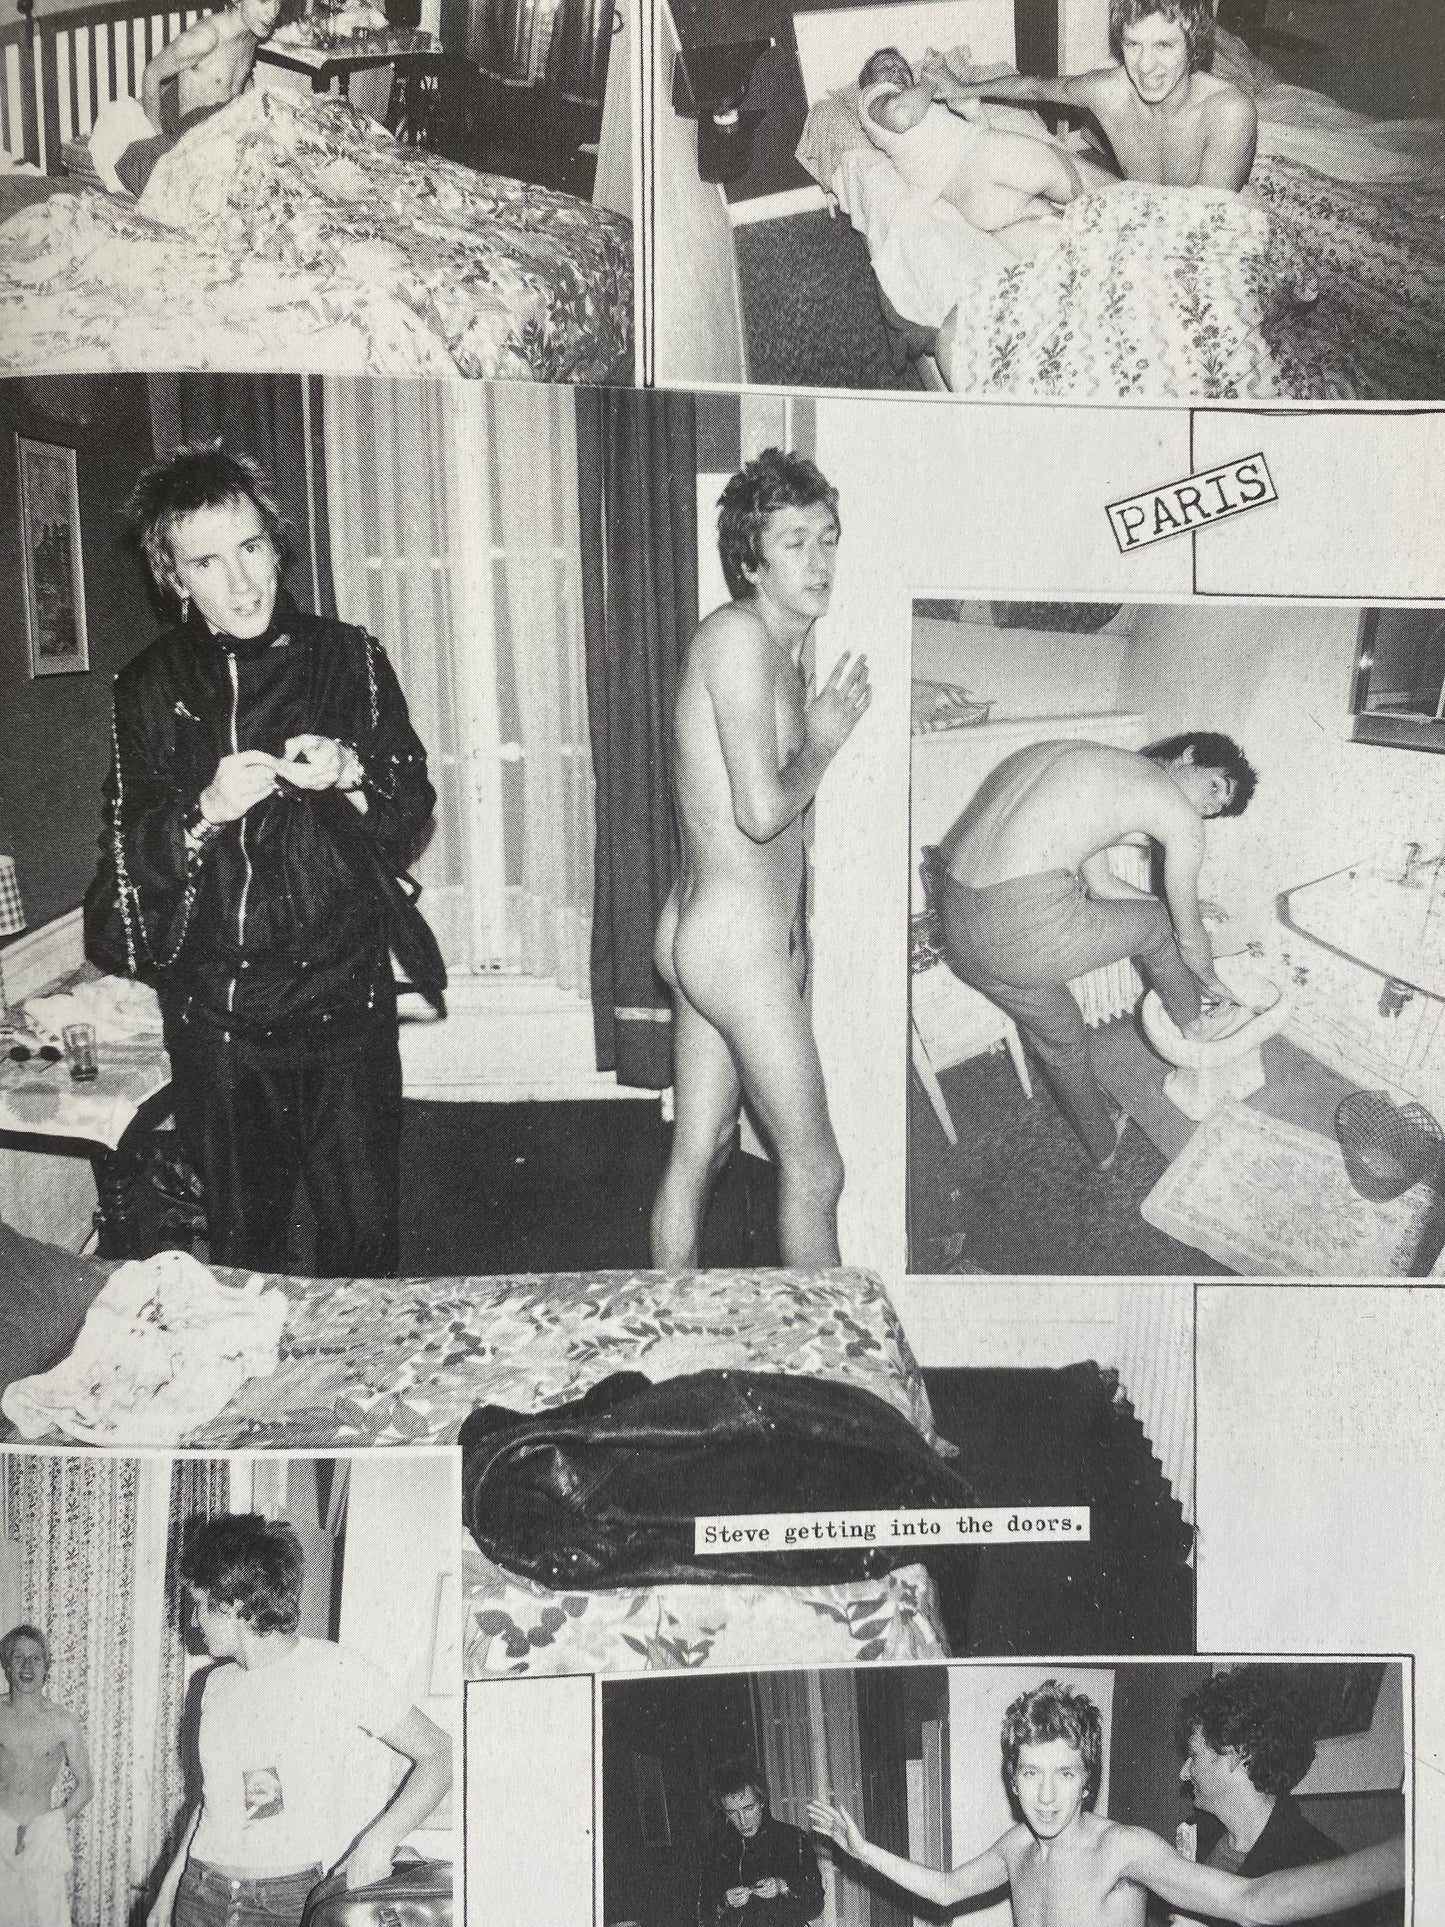 Sex Pistols File (1995)